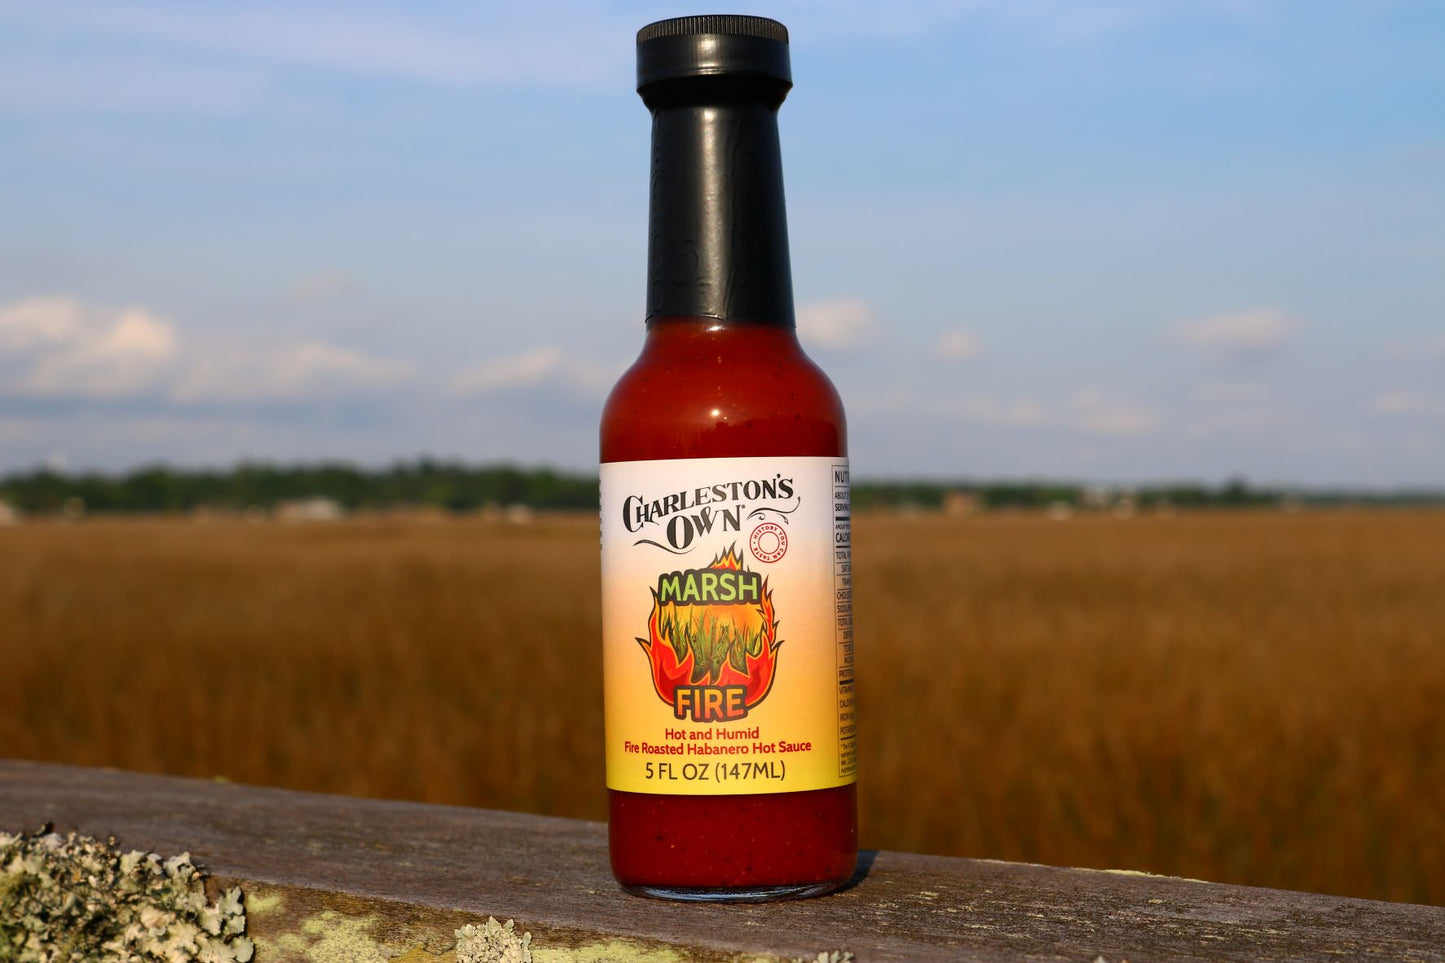 Charleston's Own Marsh Fire Hot Sauce